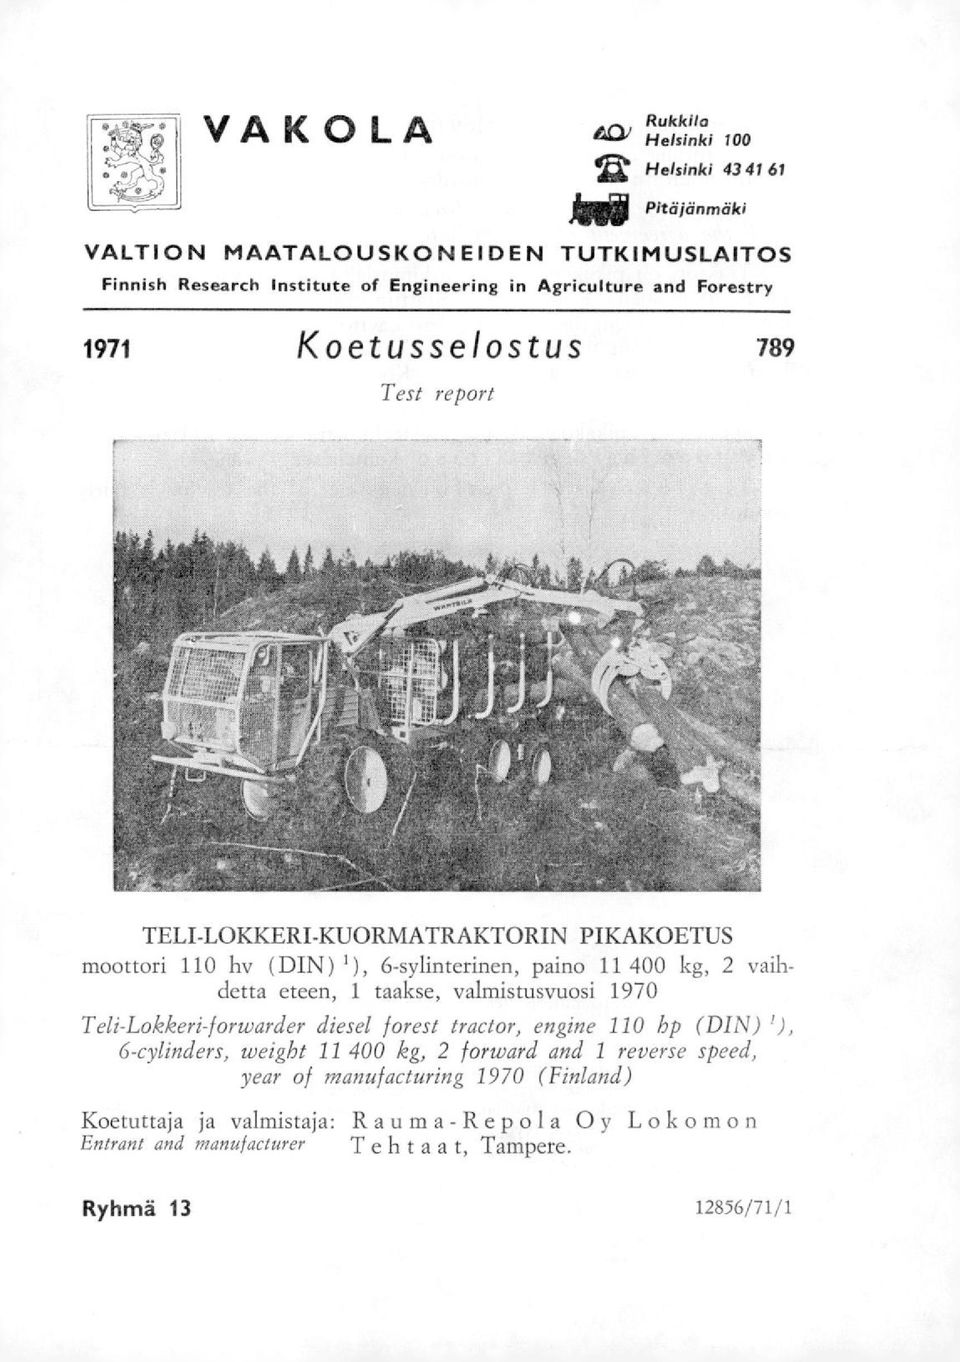 vaihdetta eteen, 1 taakse, valmistusvuosi 1970 Teli-Lokkeri-forwarder diesel forest tractor, engine 110 hp (DIN) ), 6-cylinders, weight 11 400 kg, 2 forward and 1